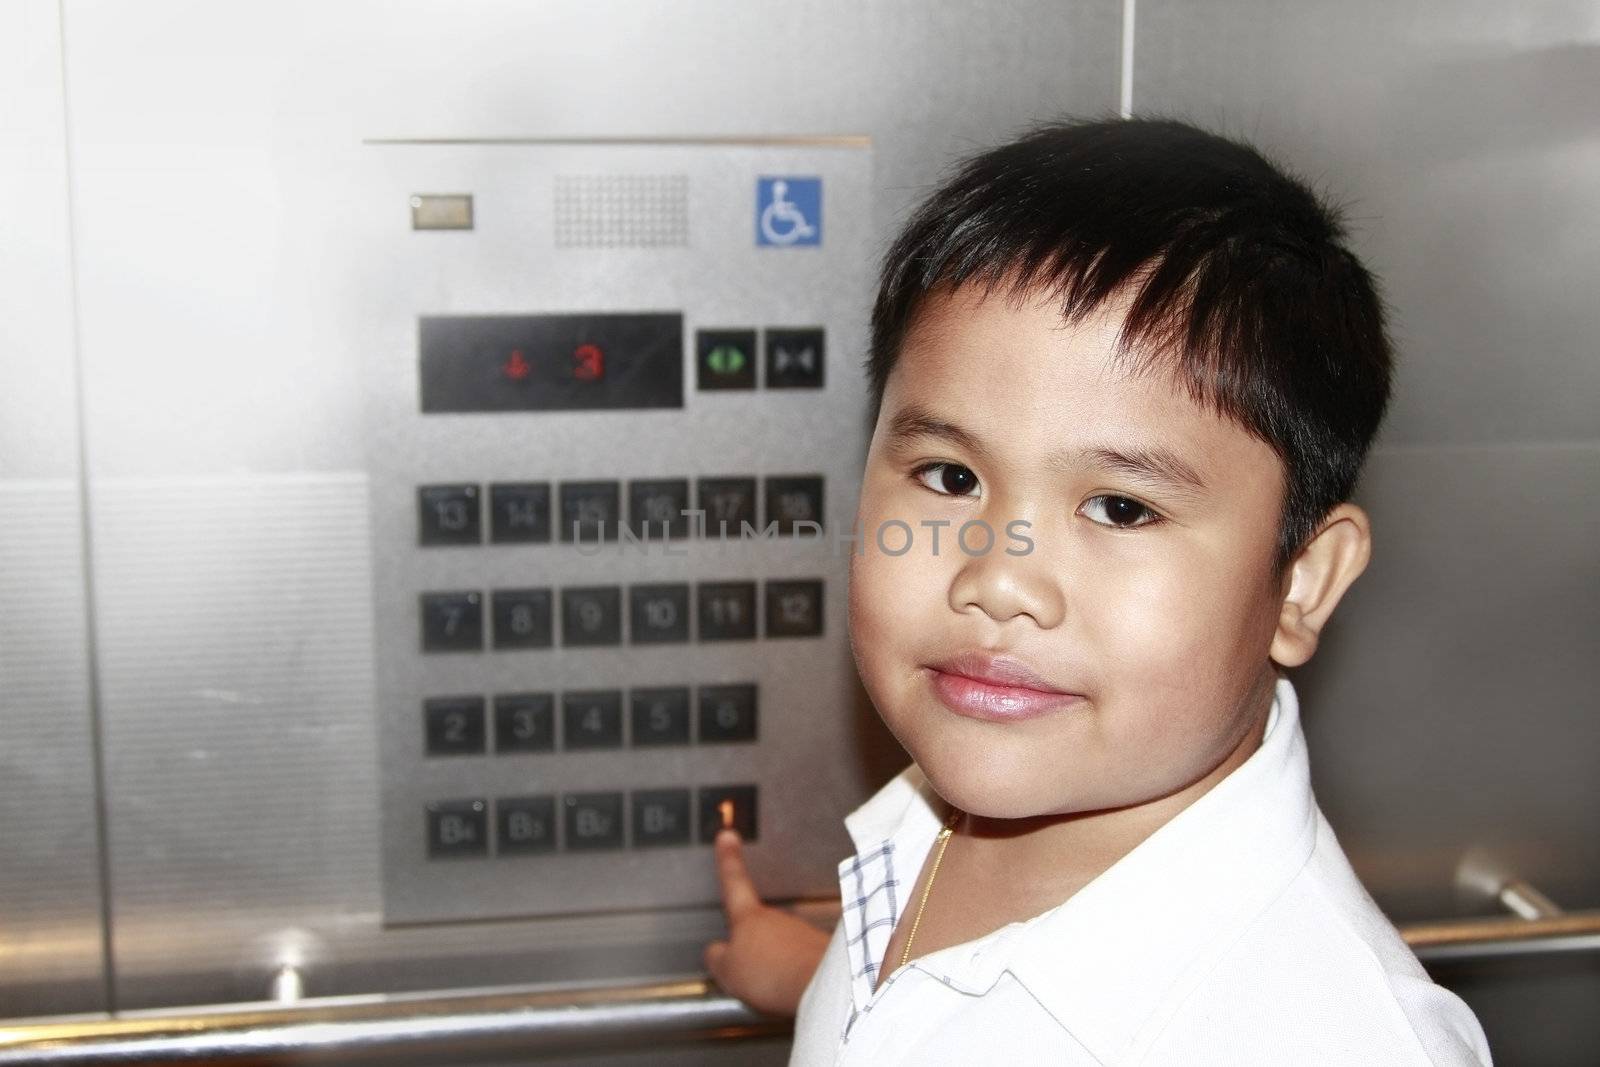 Boy inside elevator by sacatani